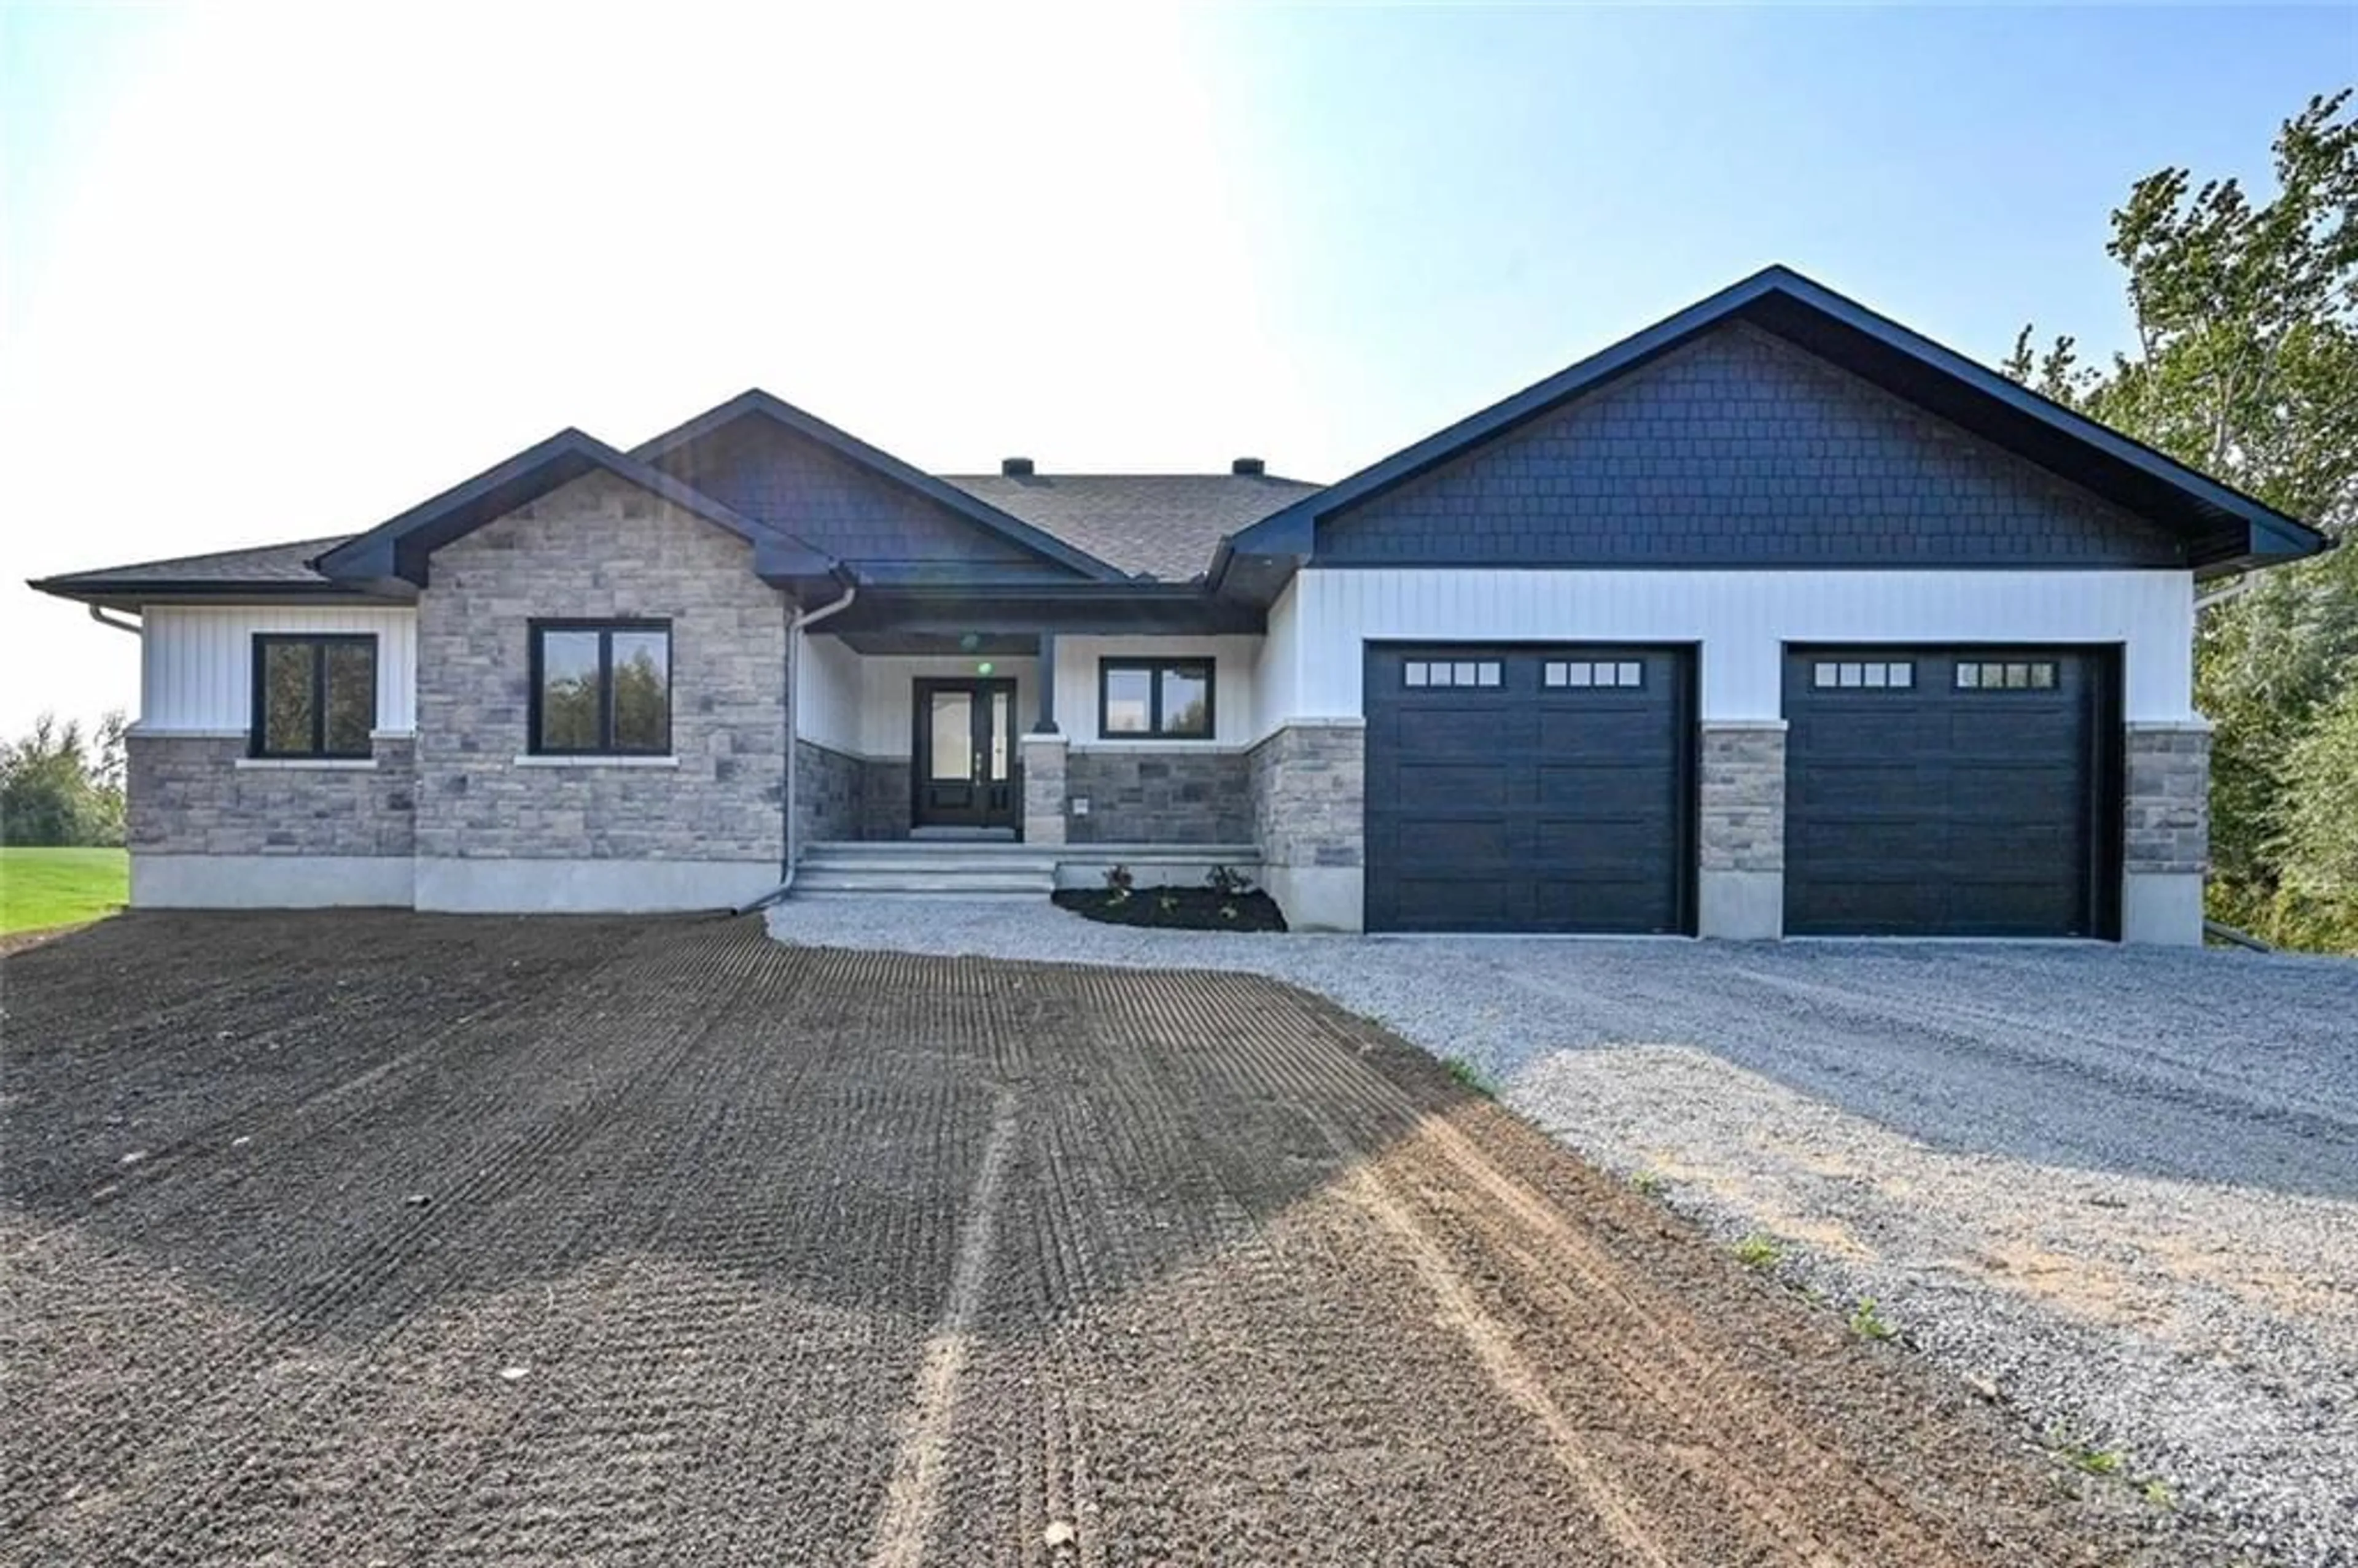 Home with brick exterior material for 00 CLARK Rd, Mountain Ontario K0E 1S0